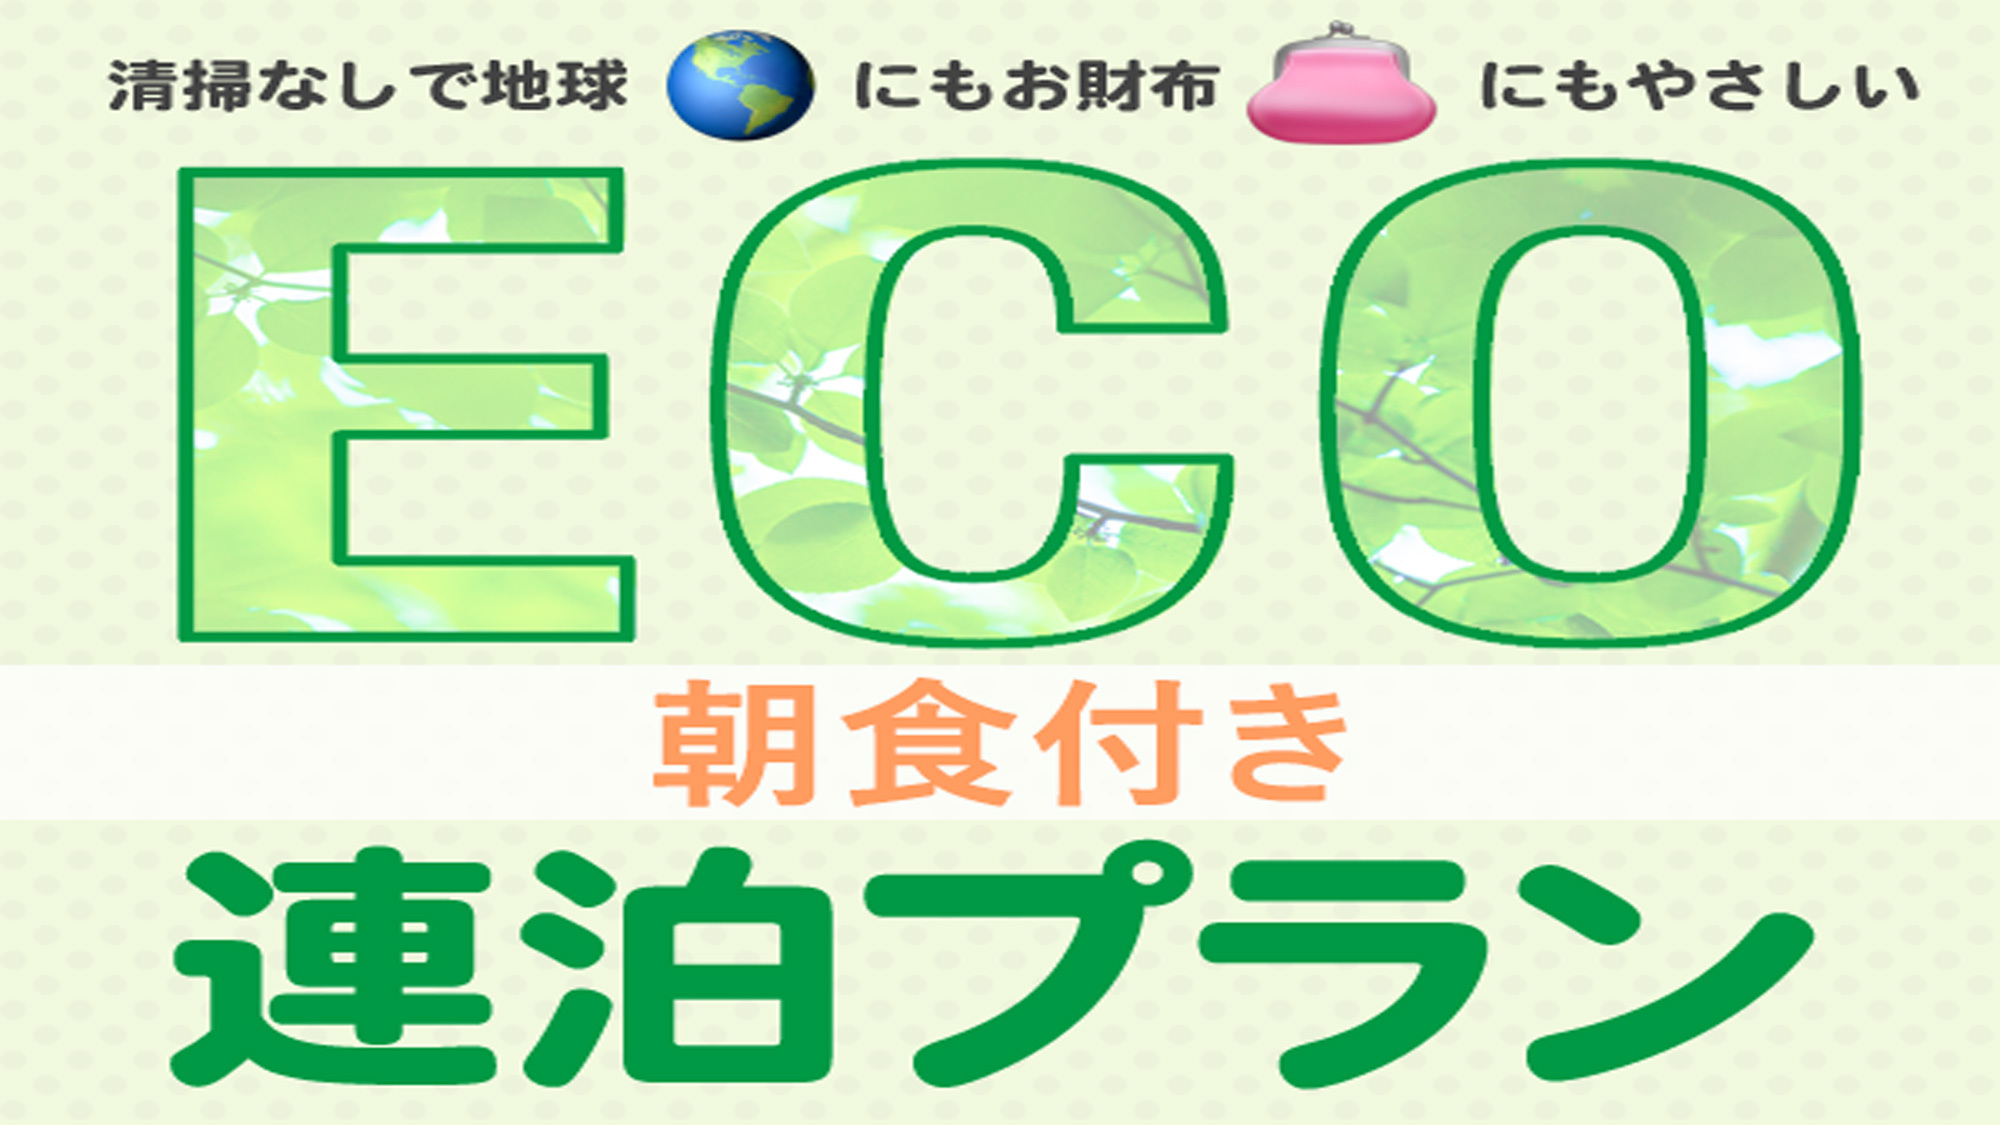 【eco連泊】お財布と環境にやさしく【朝食付プラン】